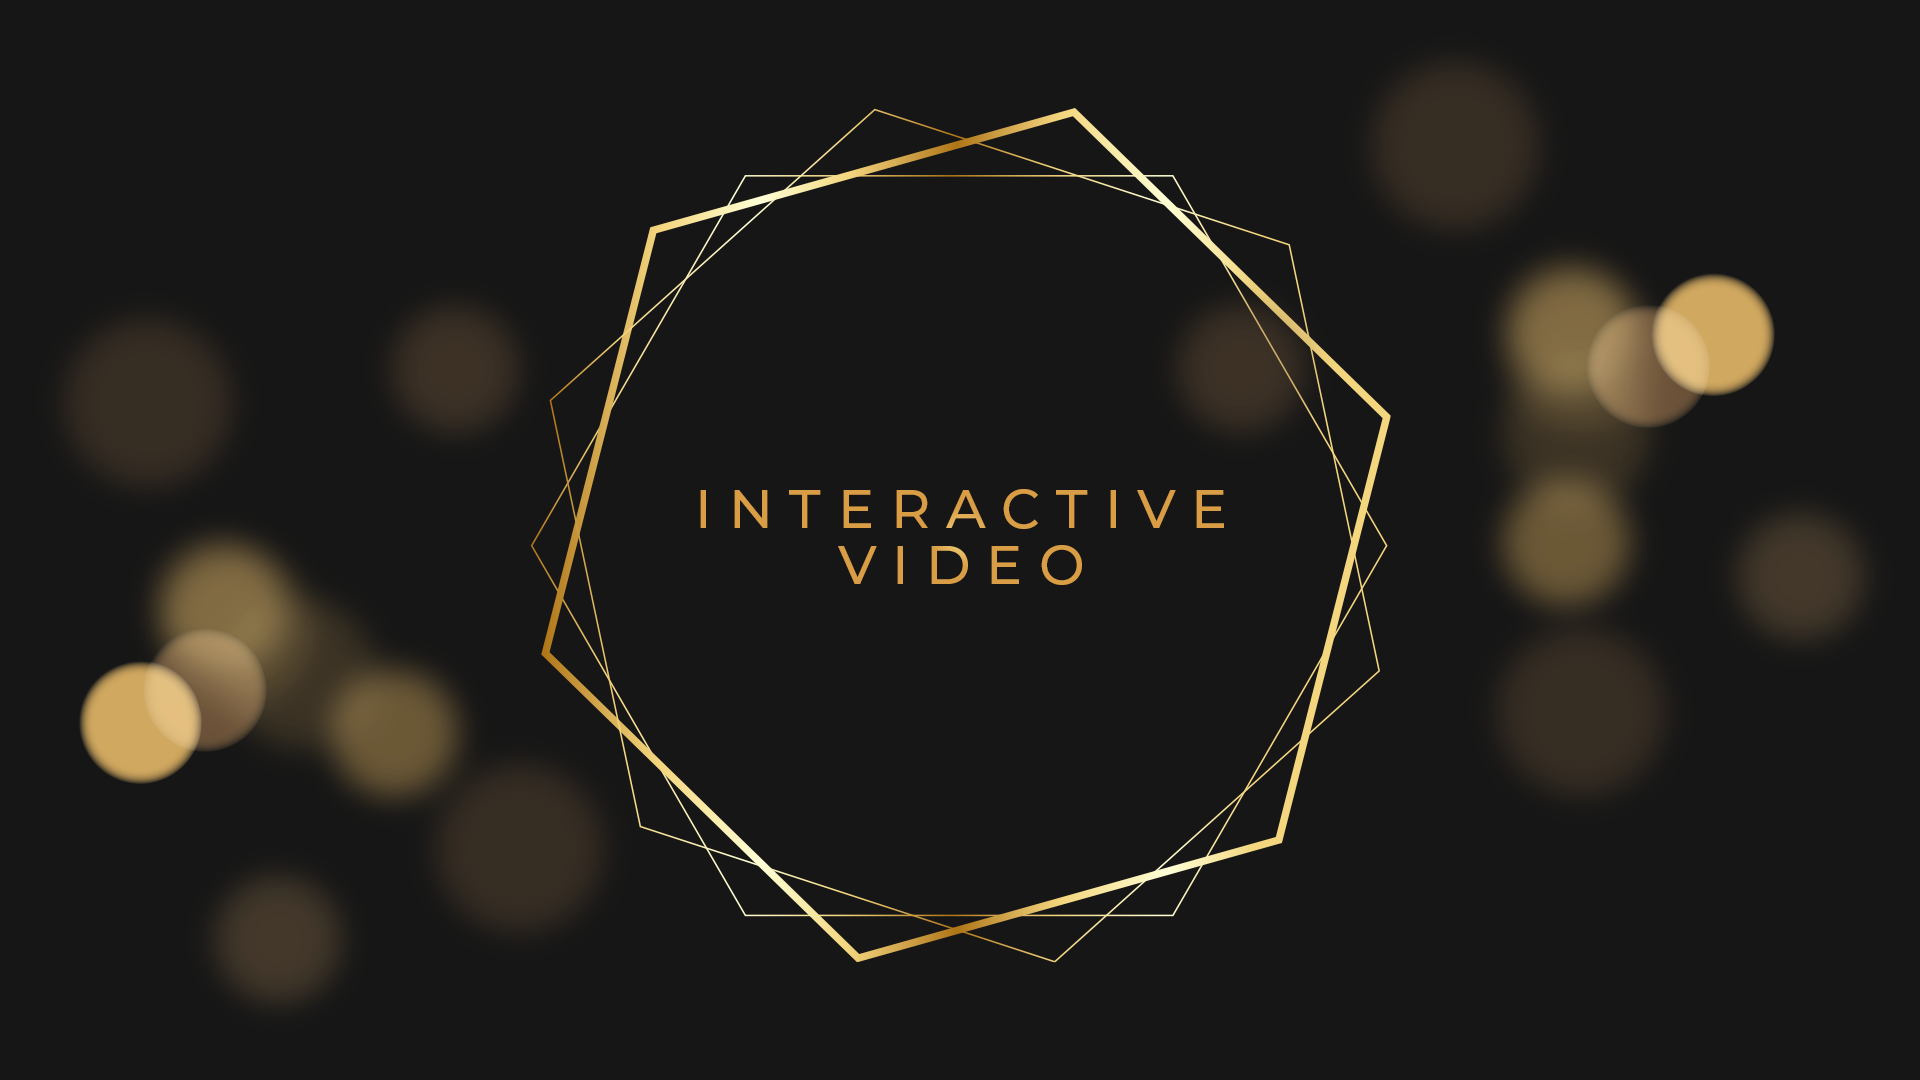 Interactive Video